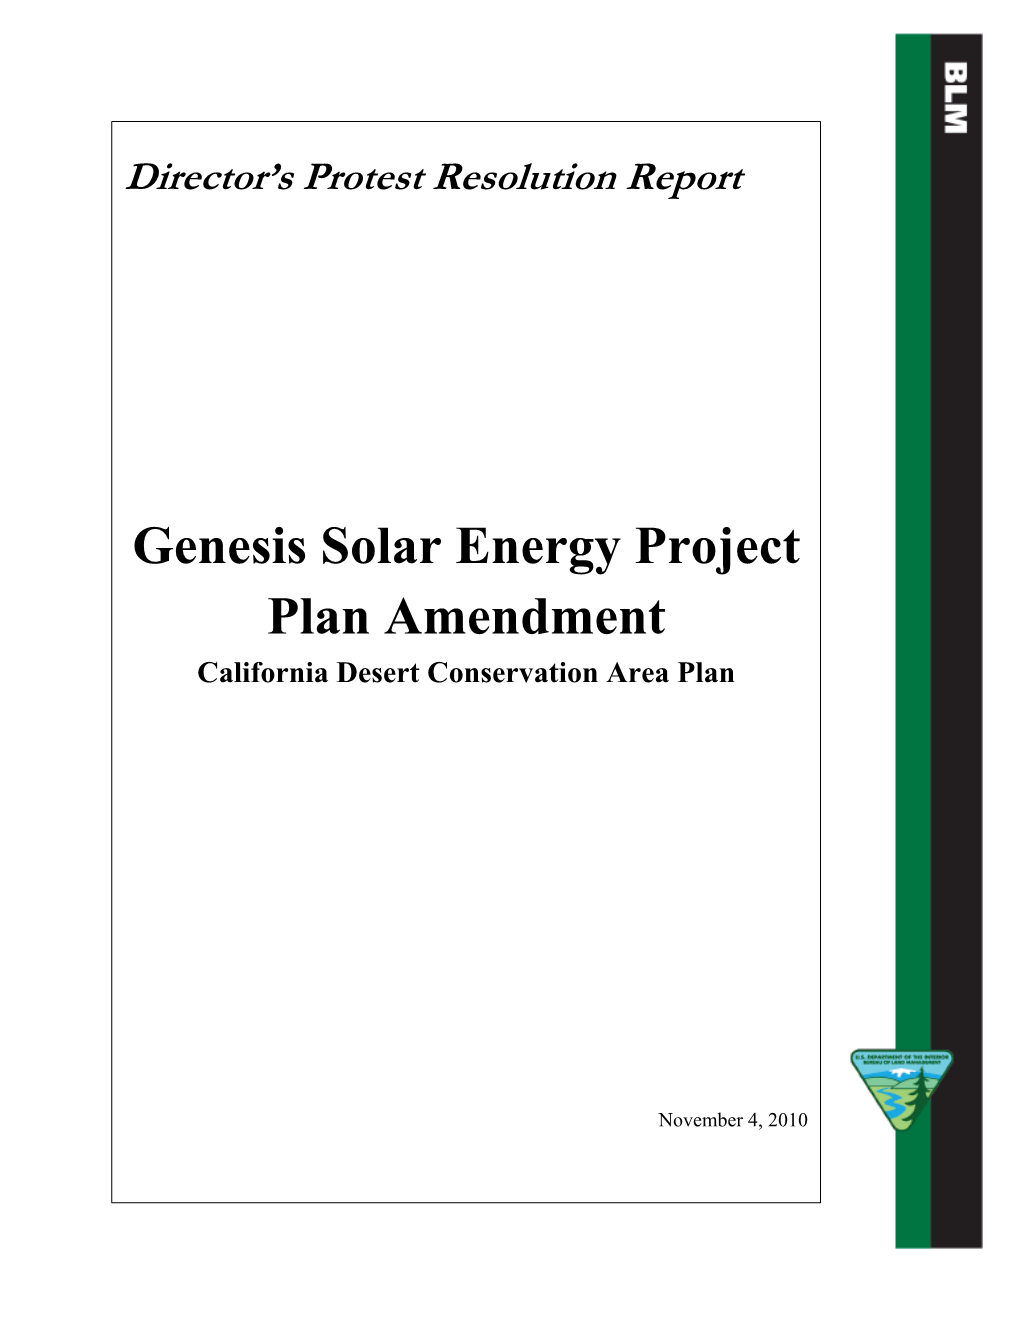 Genesis Solar Energy Project Plan Amendment California Desert Conservation Area Plan